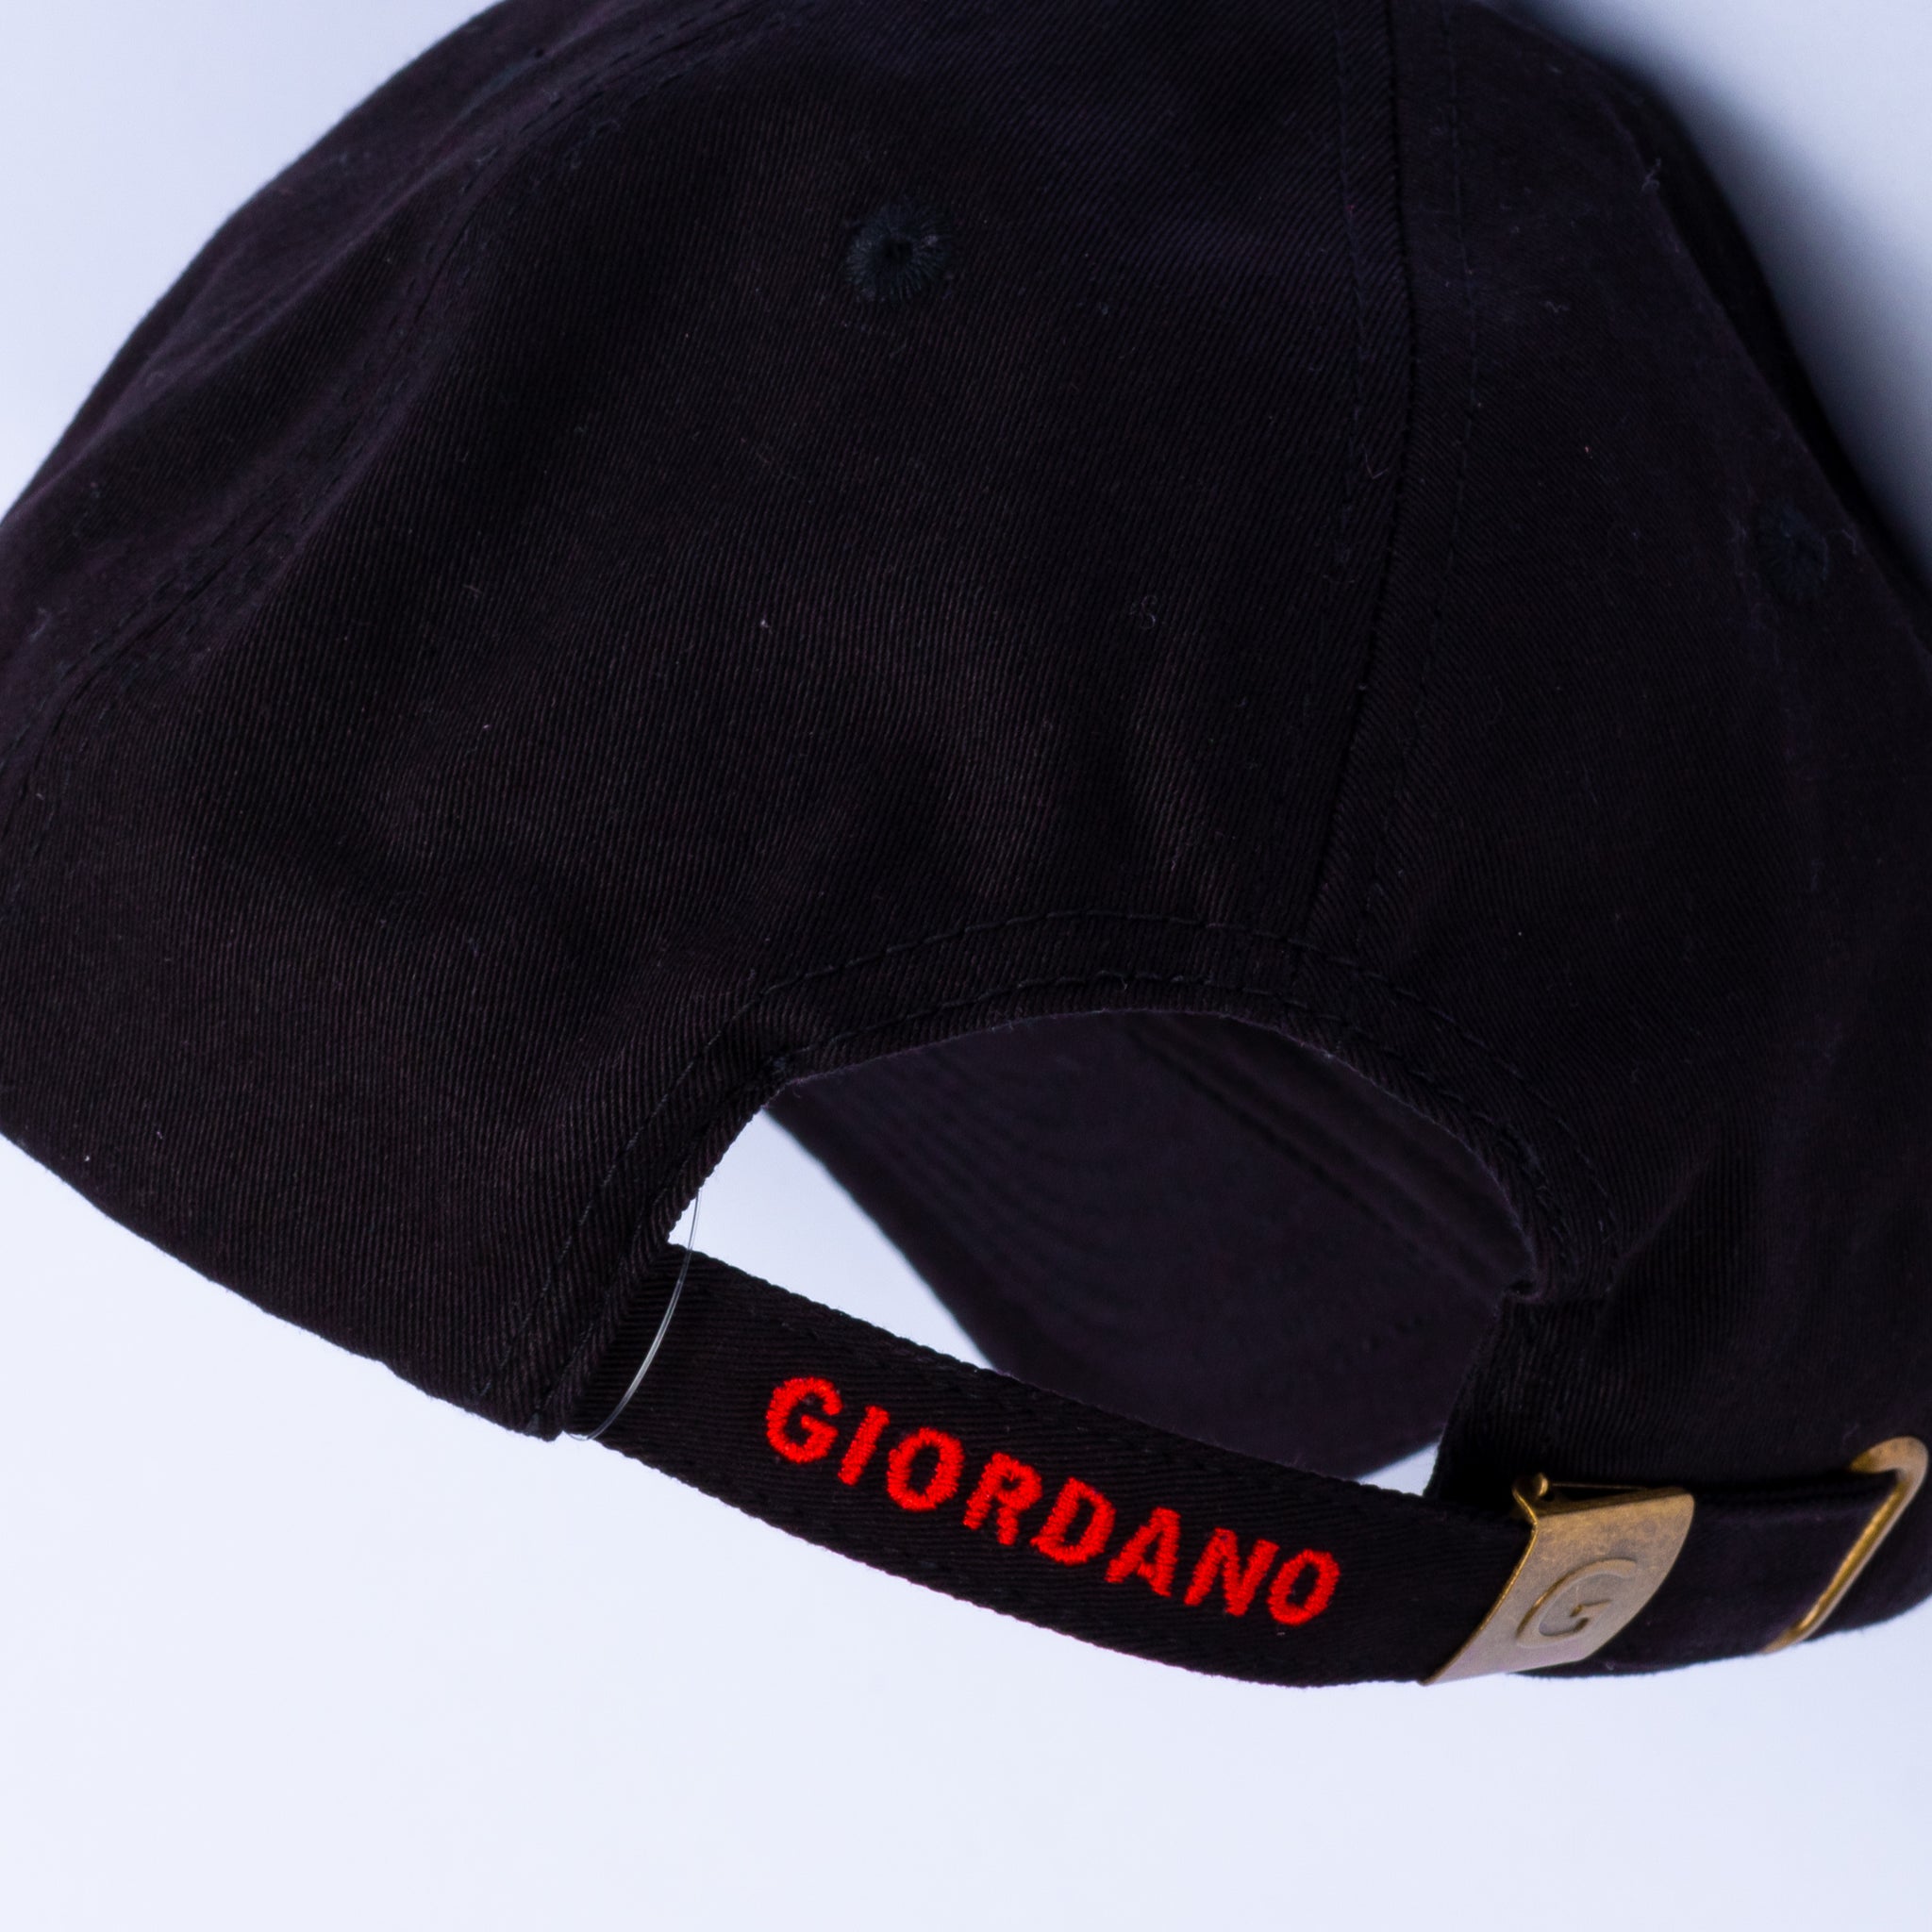 Giordano Hats - South Africa Giordano